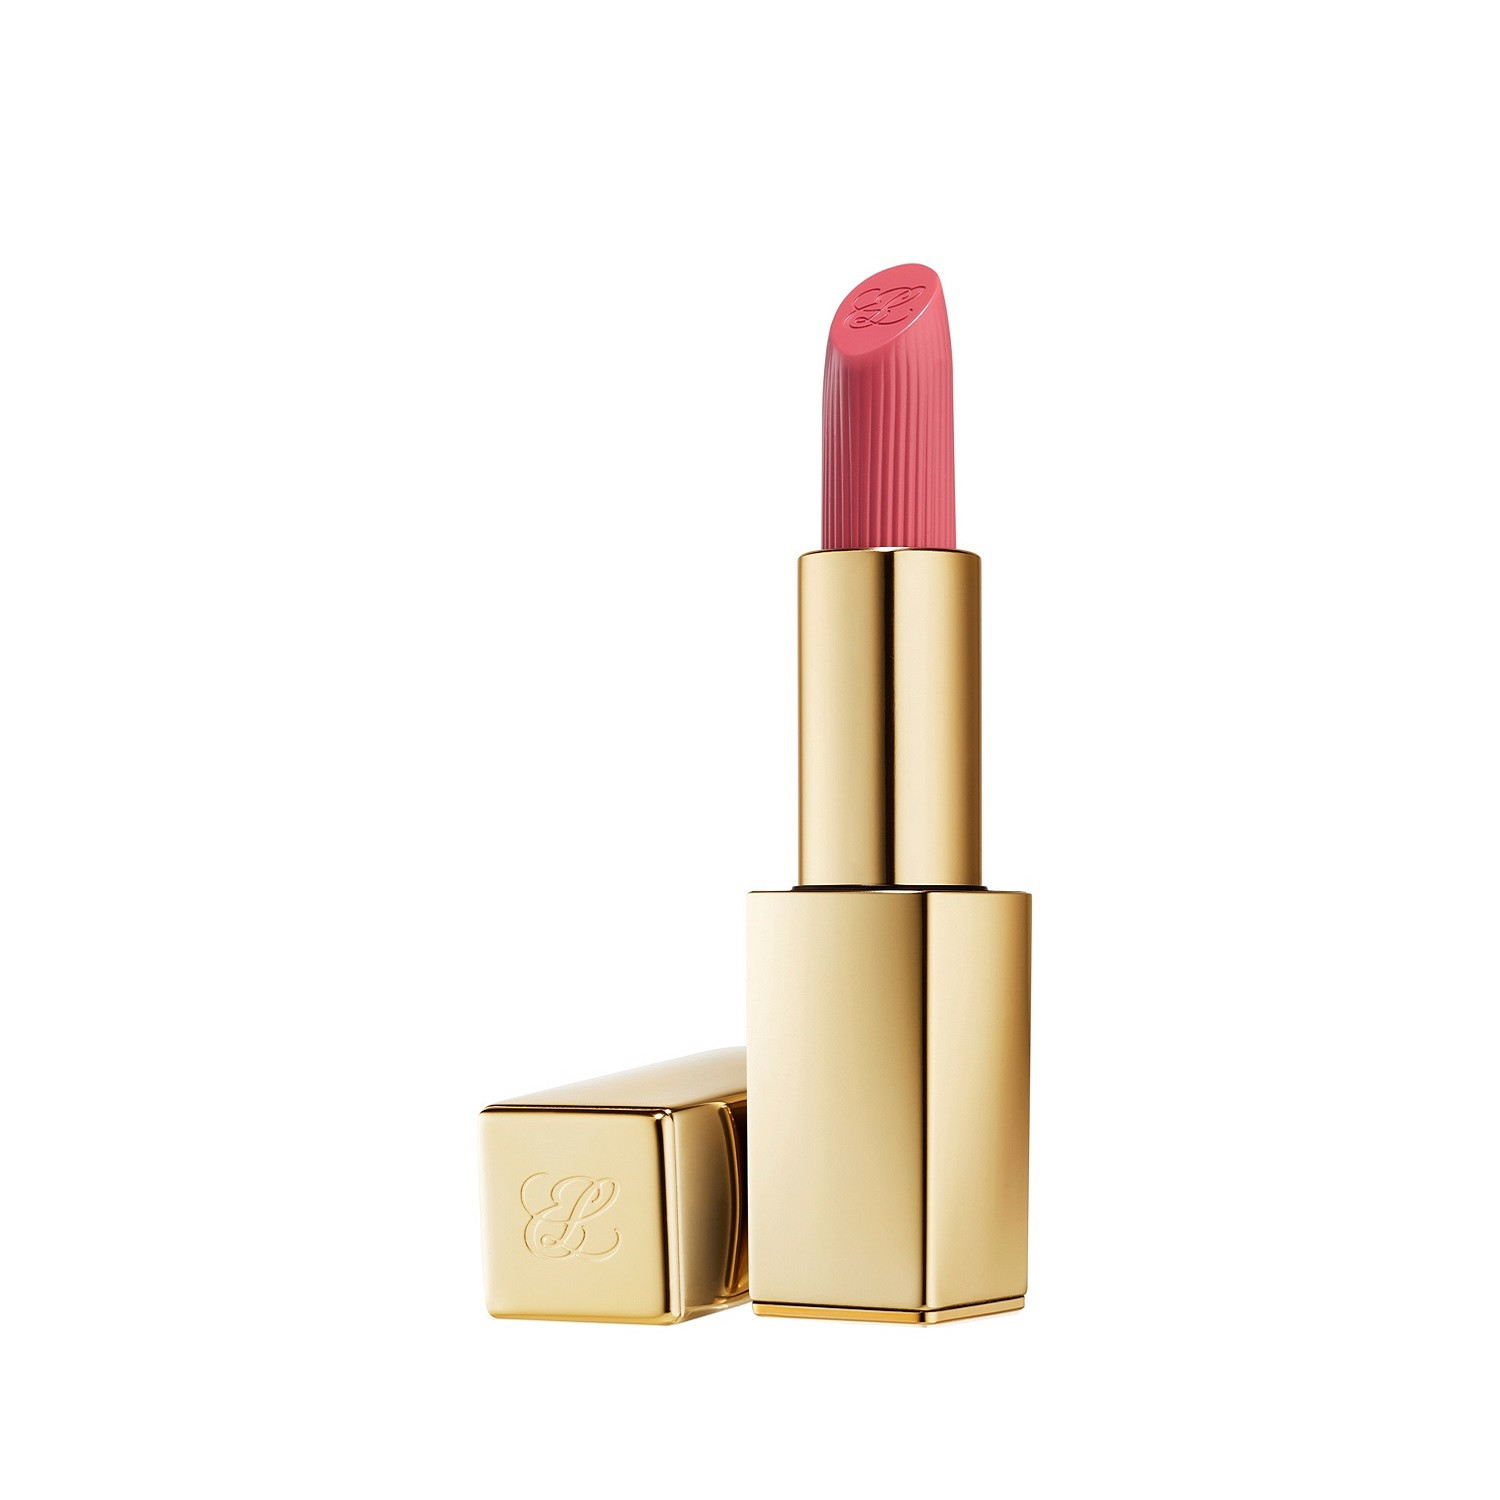 PURE COLOR creme lipstick - 260 Eccentric, Light Pink, large image number 0